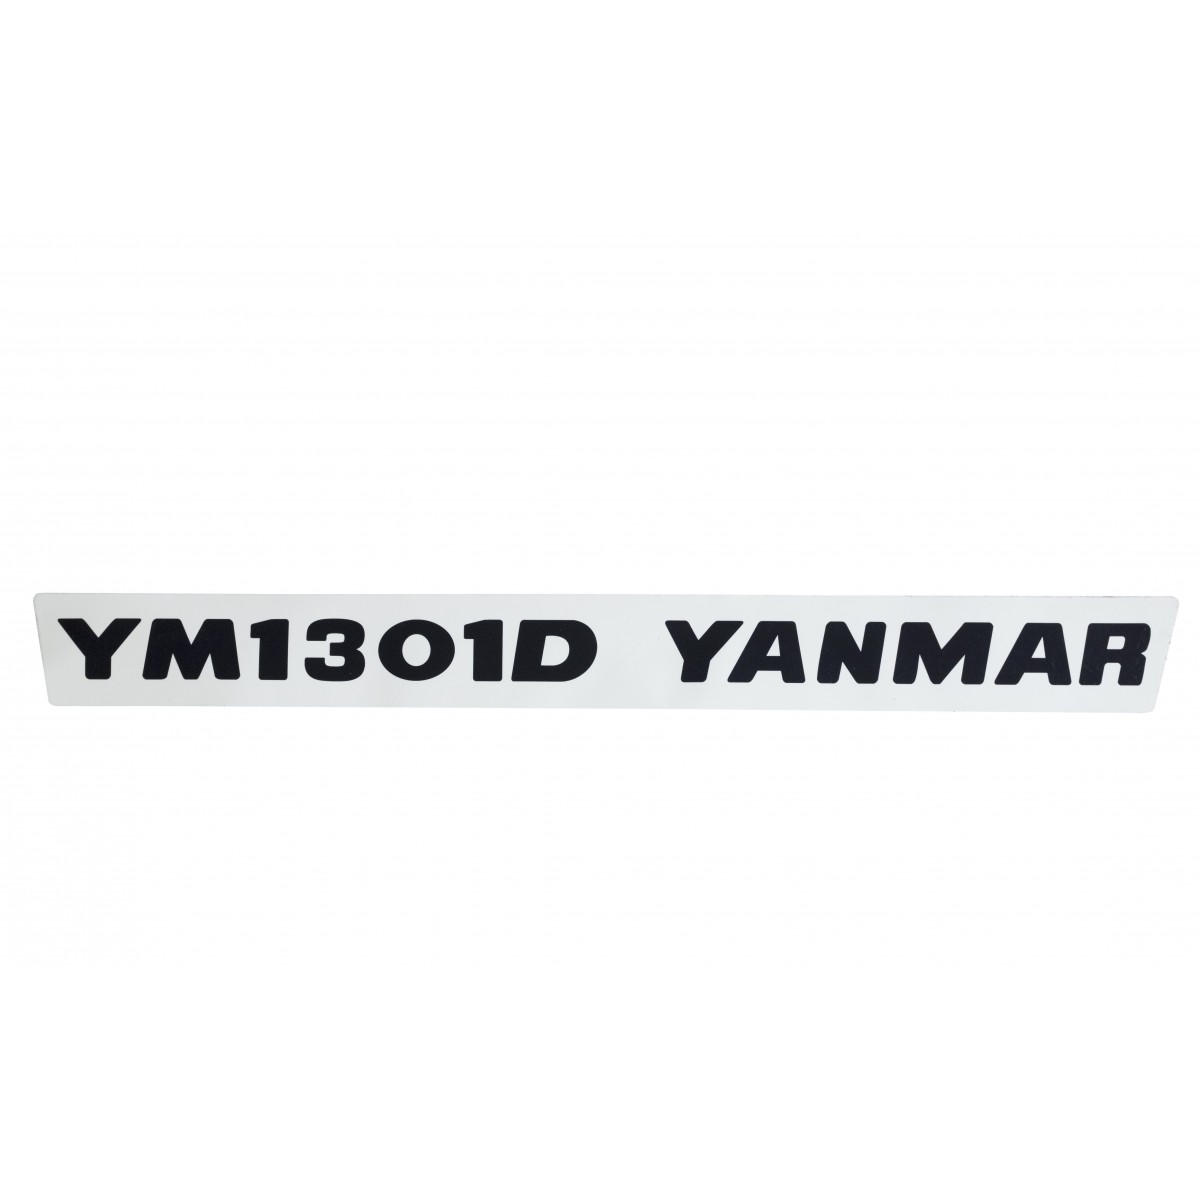 Nálepka (1) Yanmar YM1301D